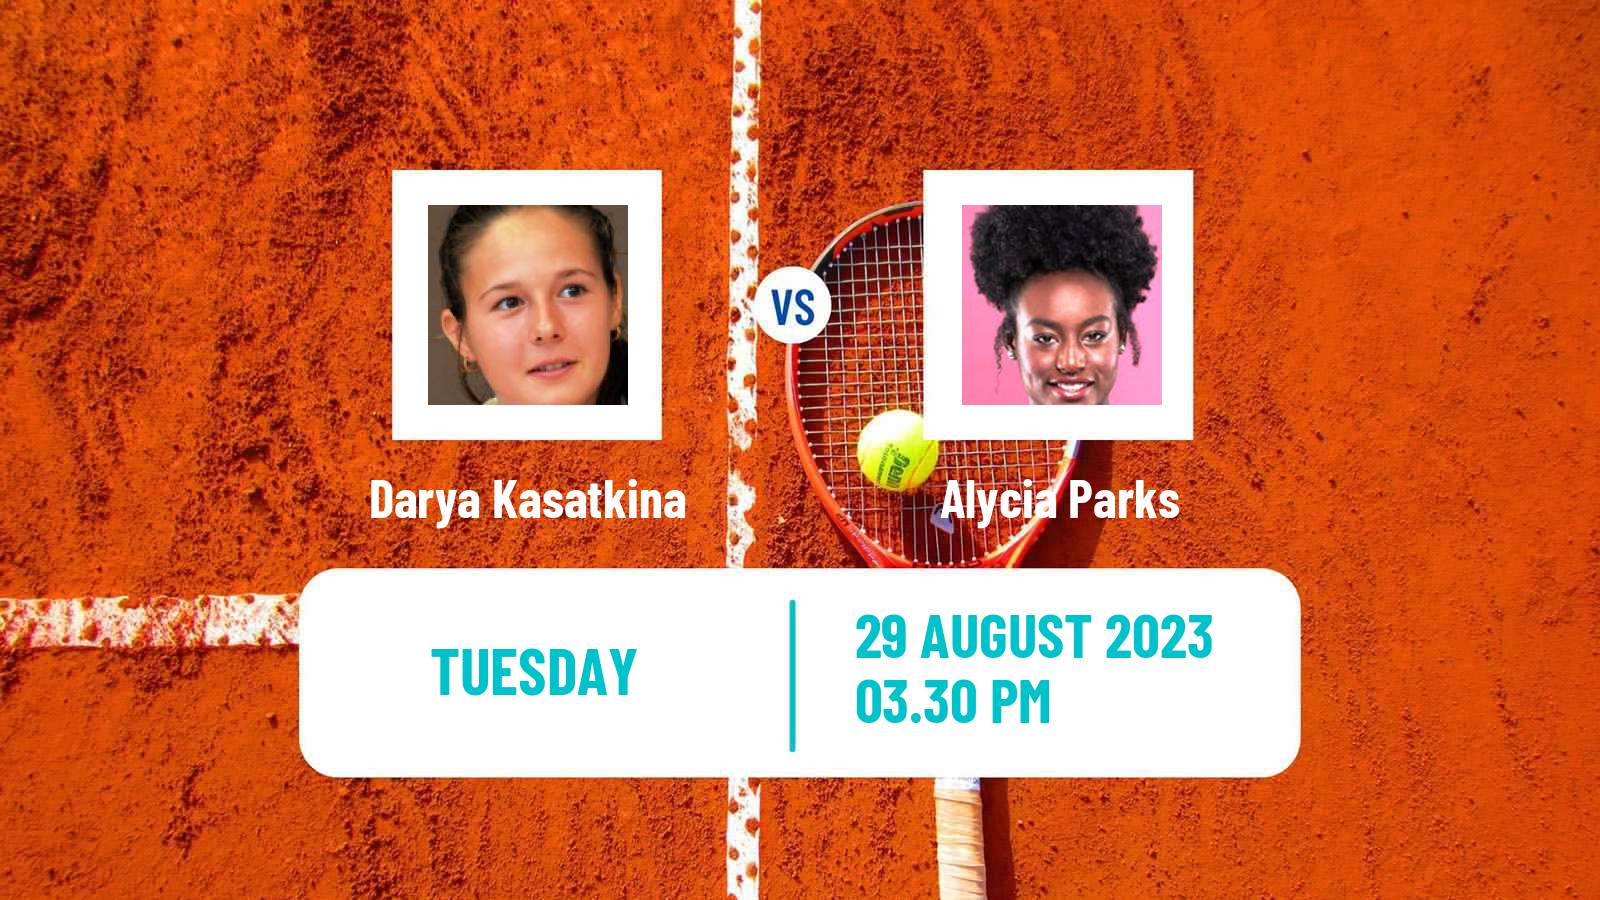 Tennis WTA US Open Darya Kasatkina - Alycia Parks